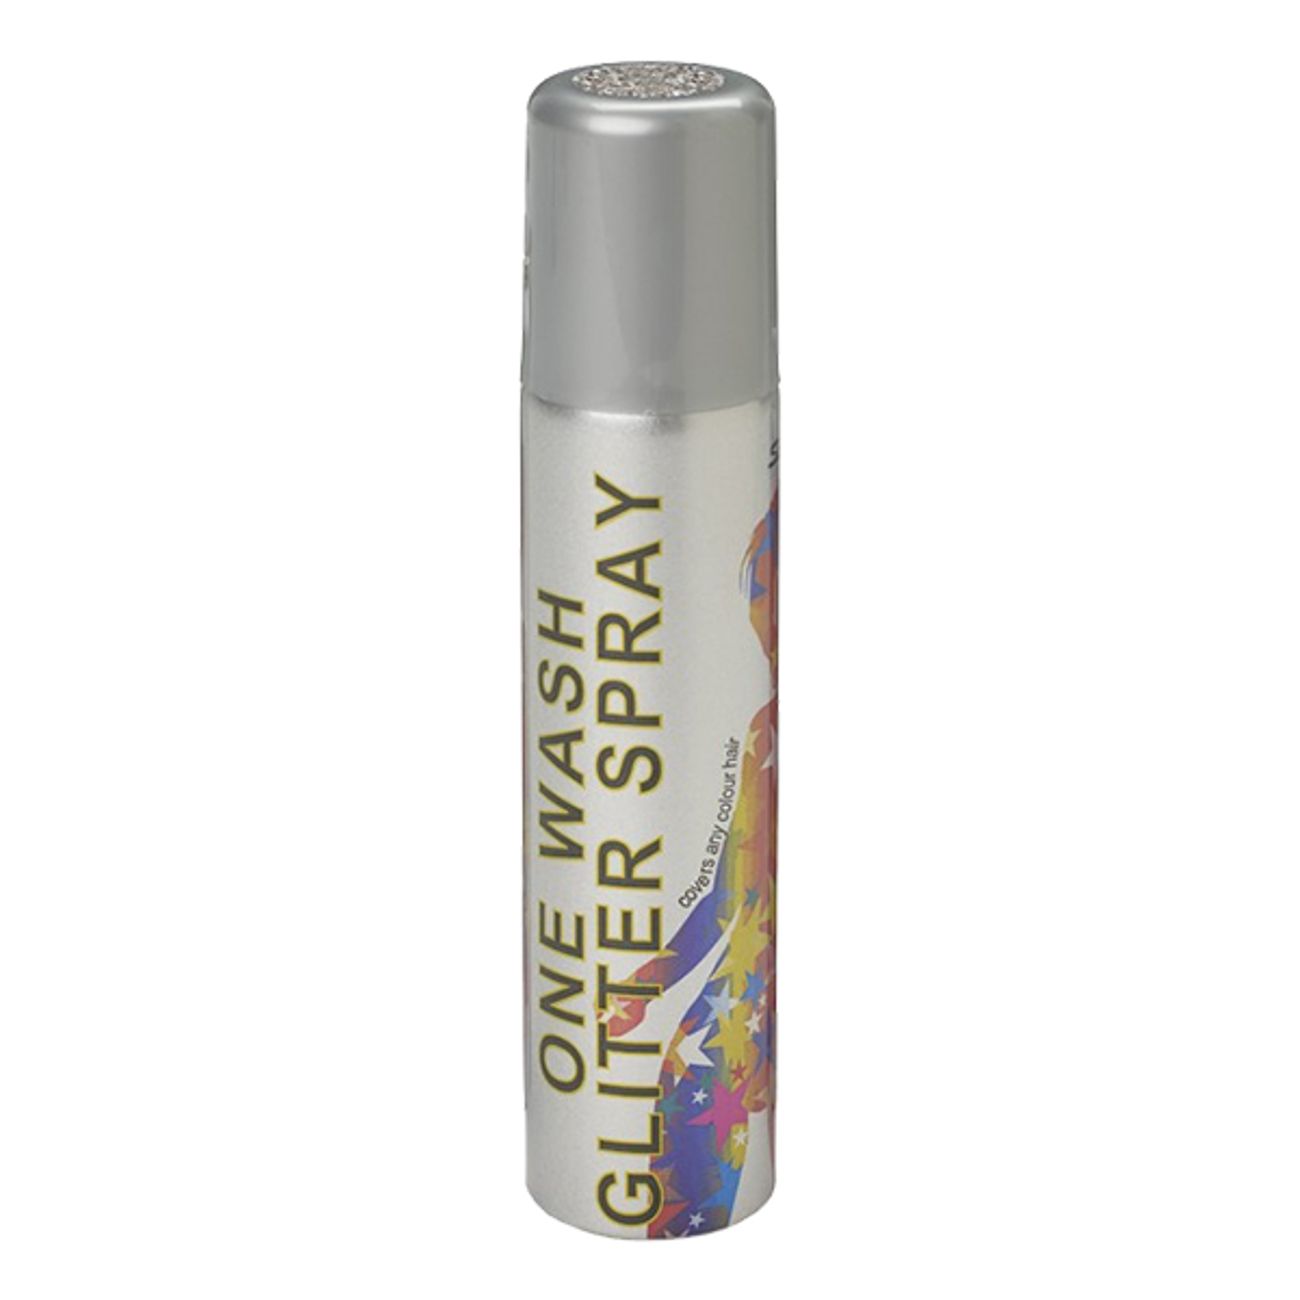 stargazer-glitterspray-4